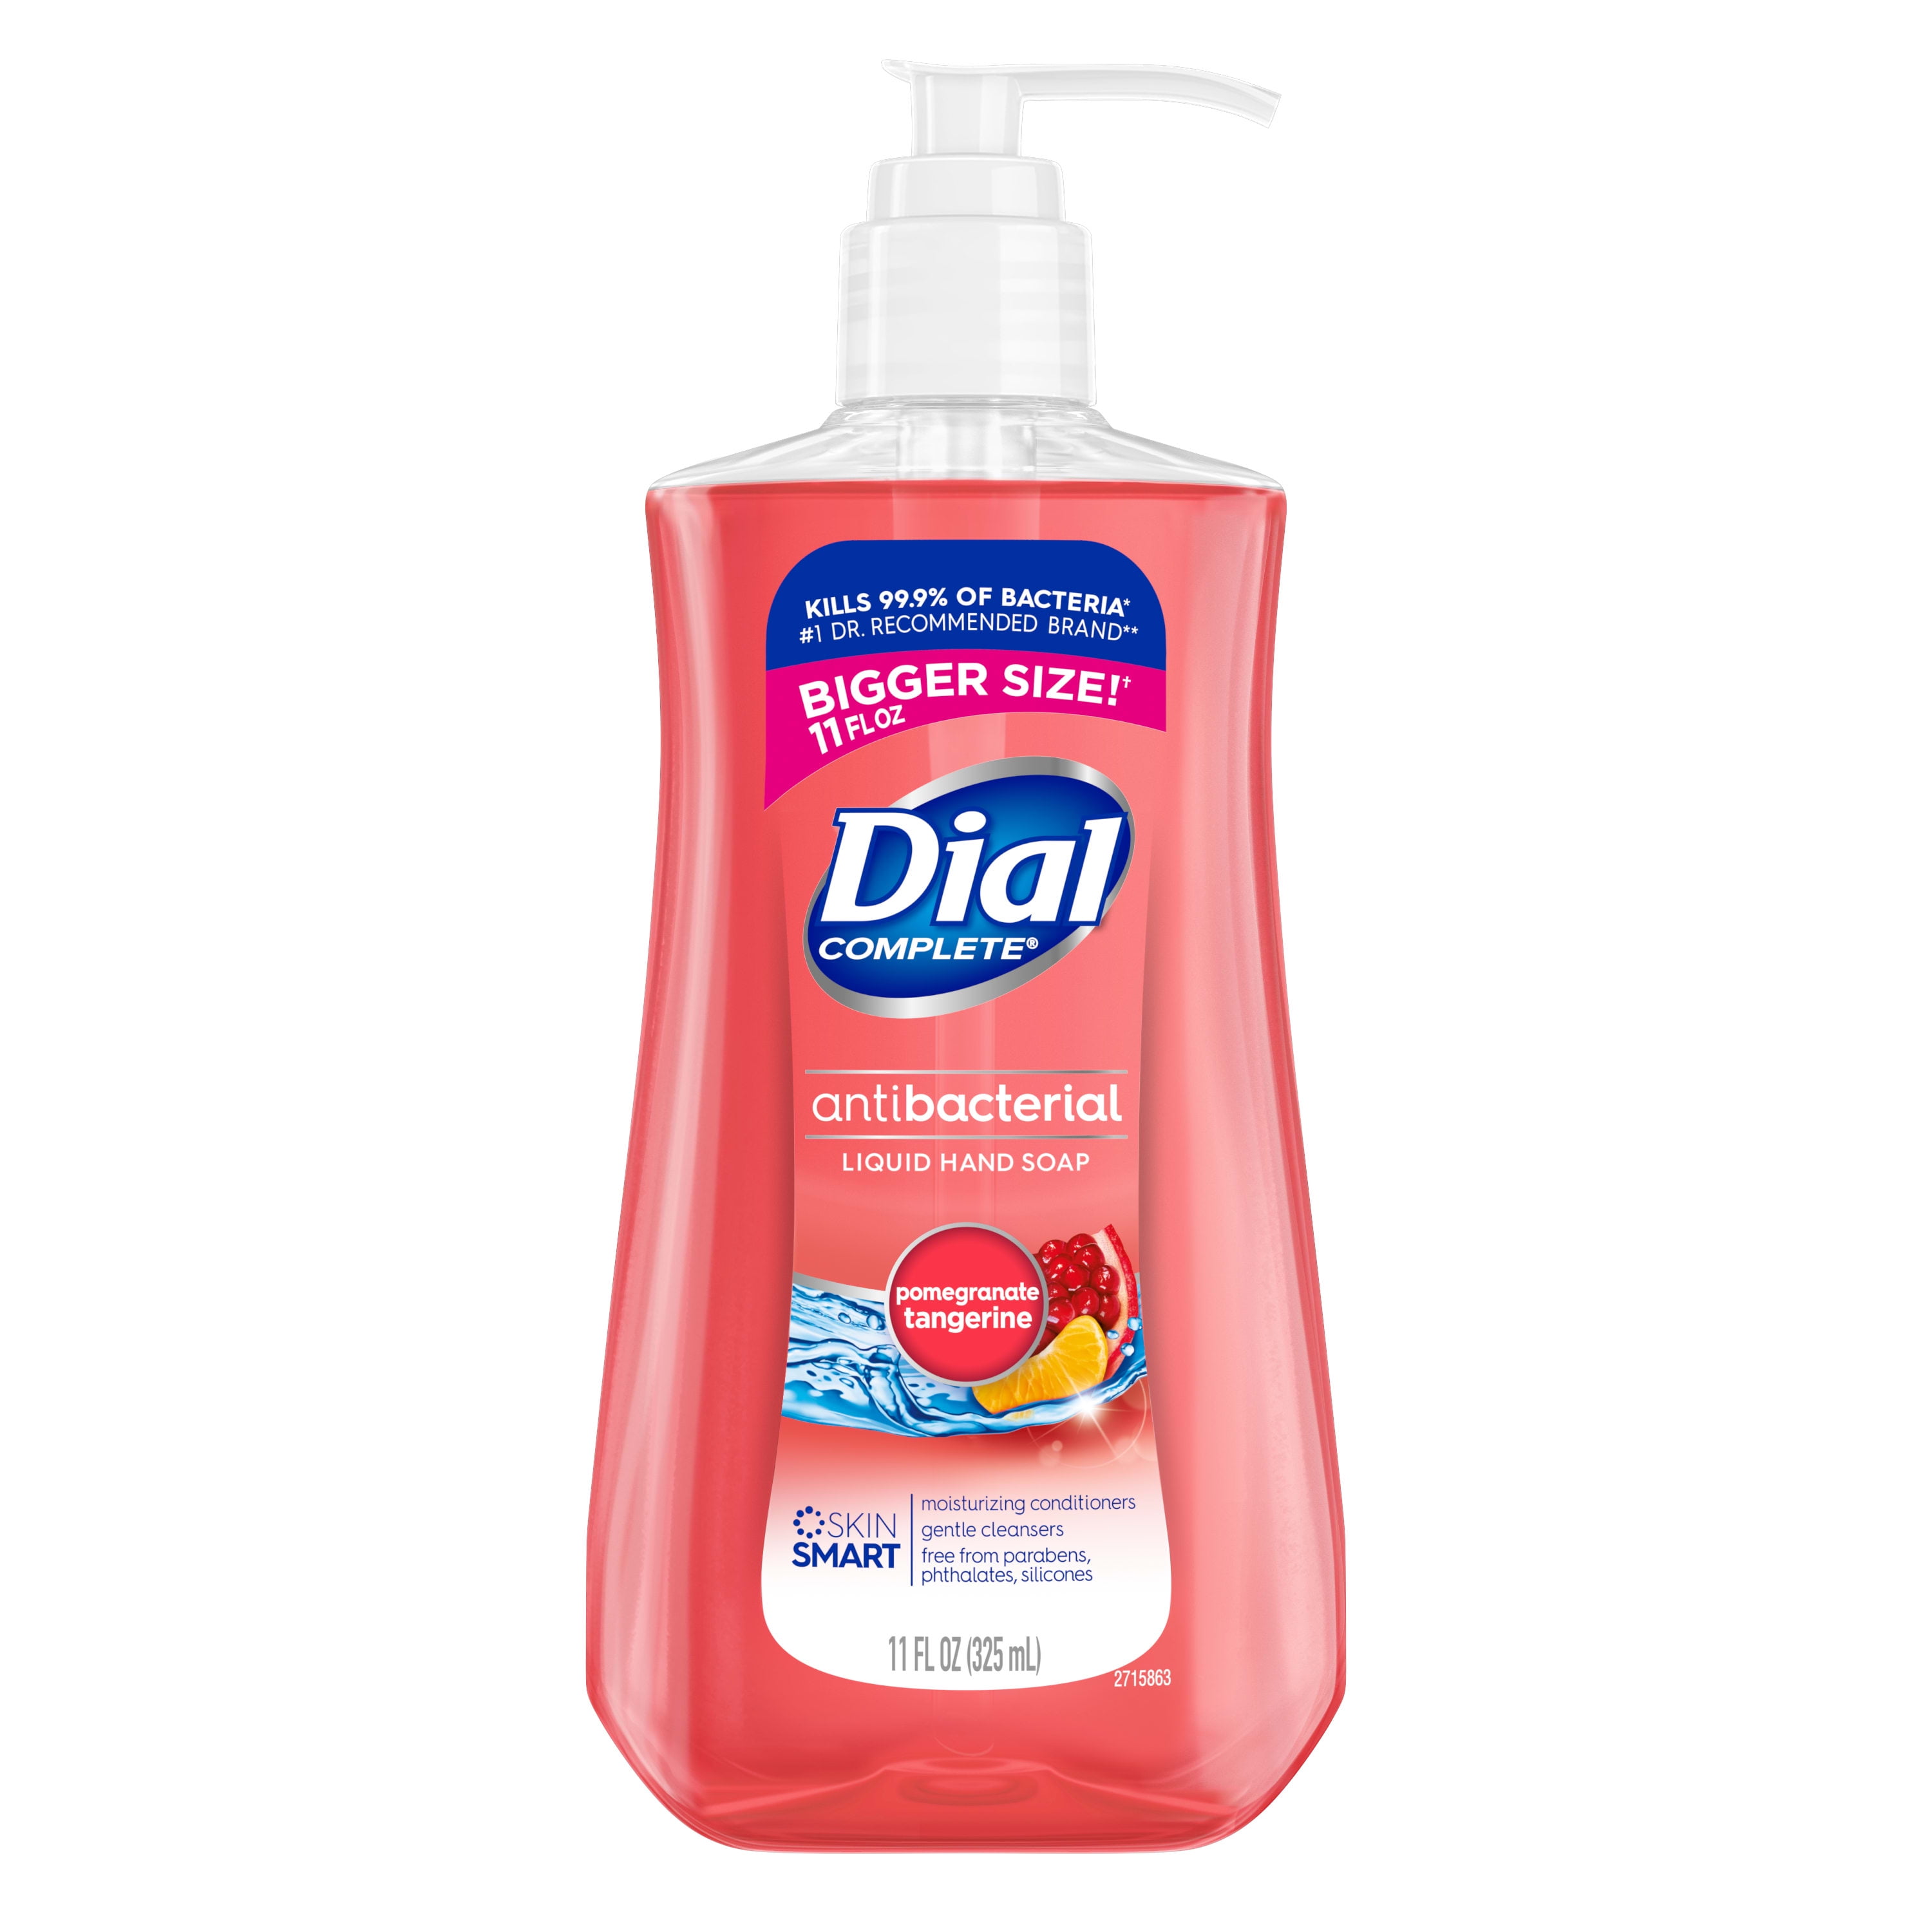 Dial Complete Antibacterial Liquid Hand Soap, Pomegranate Tangerine, 11 fl oz